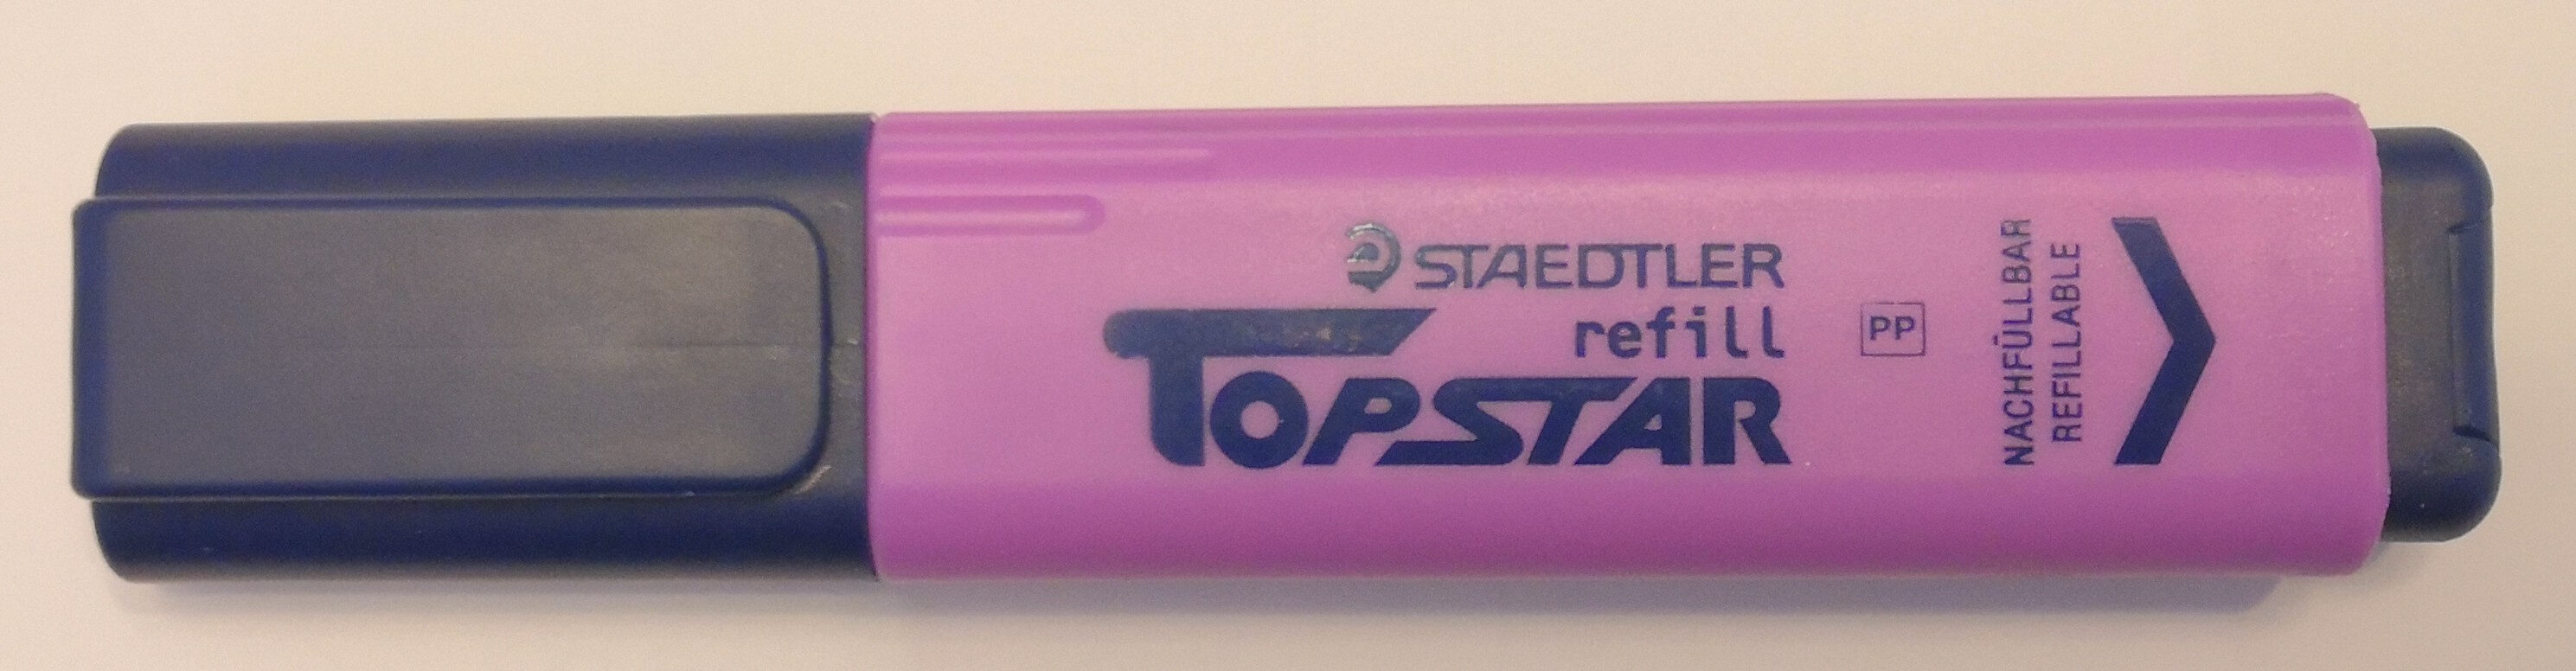 Staedler Topstar refill, violett - Product - de